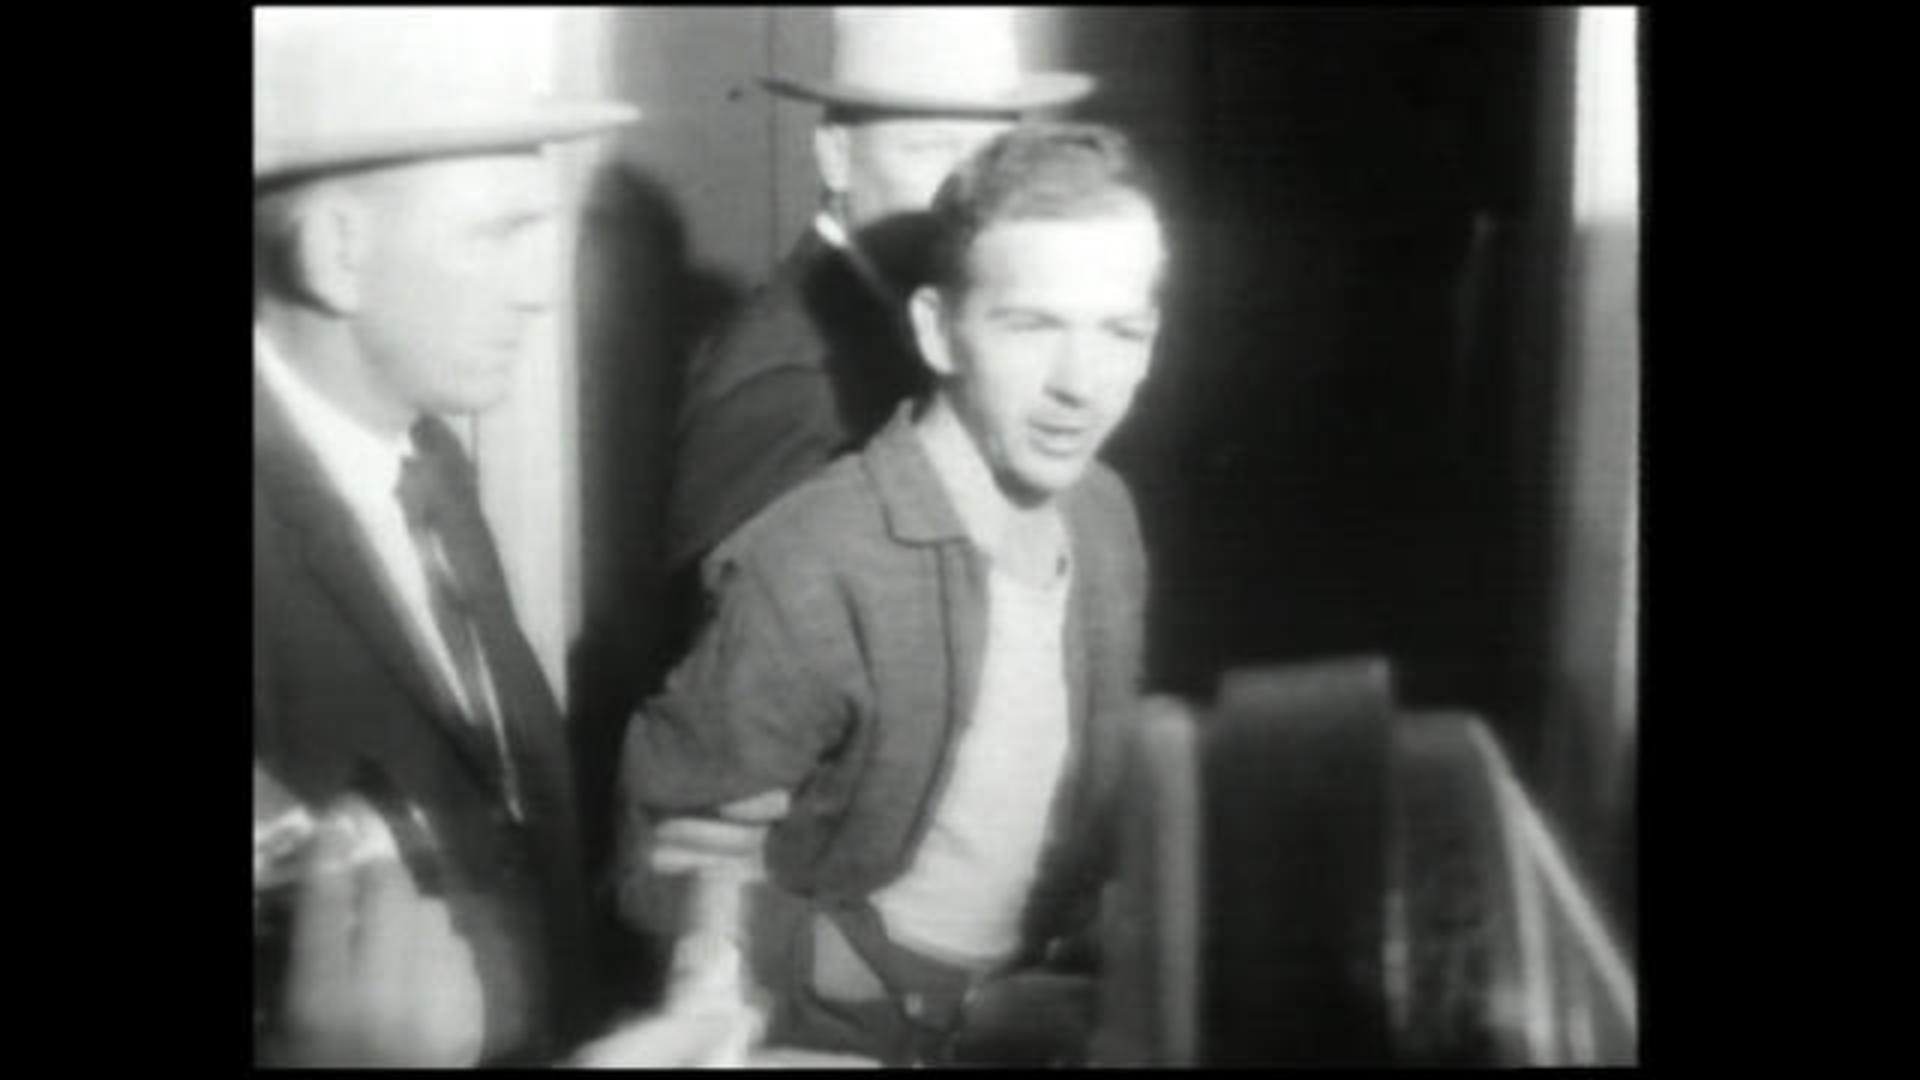 Lee Harvey Oswald: “I did not do it” - CBS News